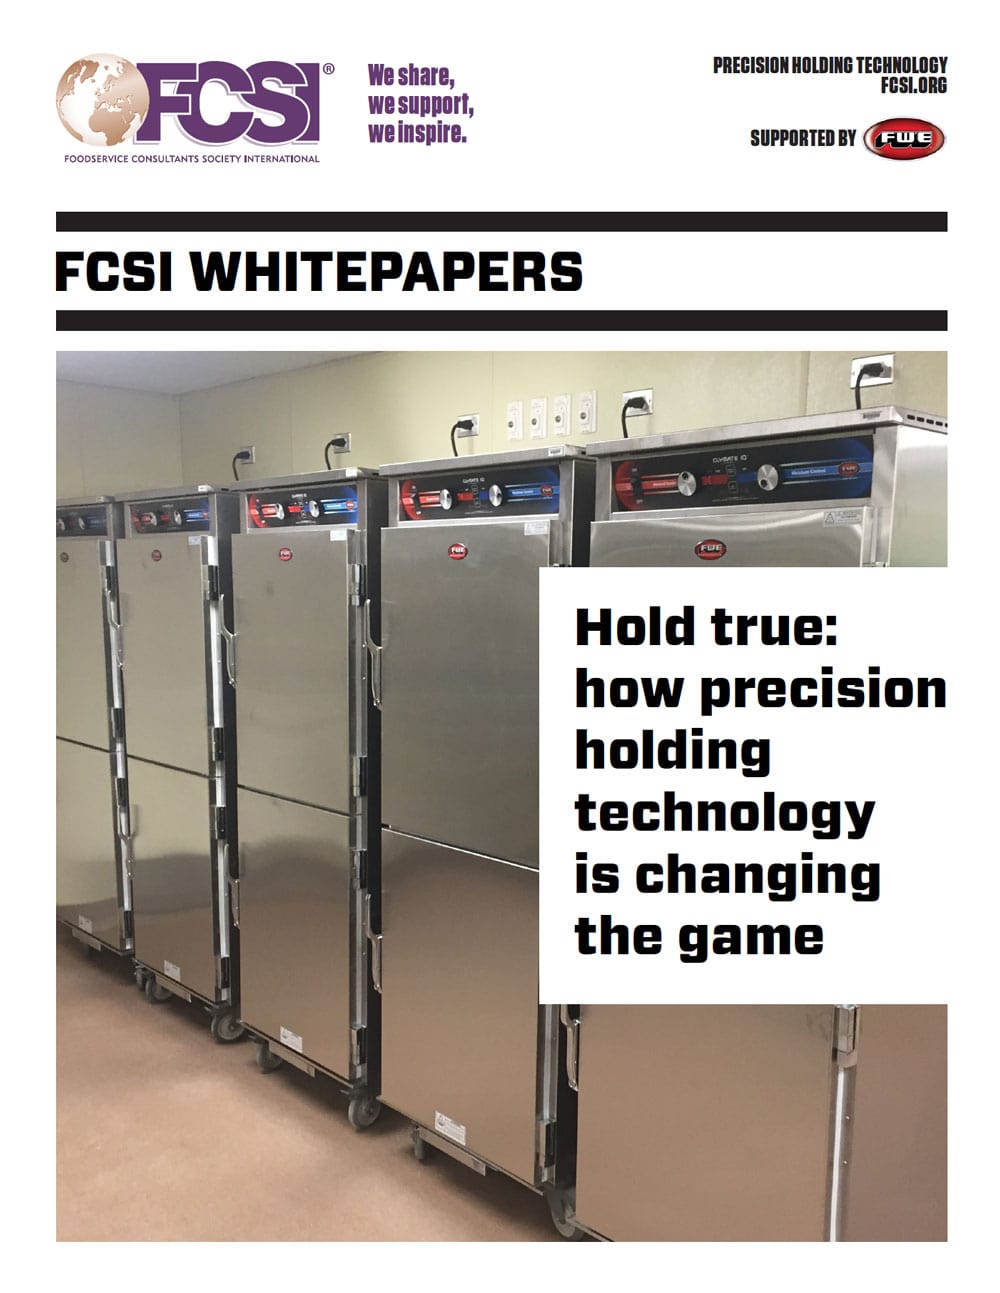 FCSI Whitepaper: Precision Holding Technology